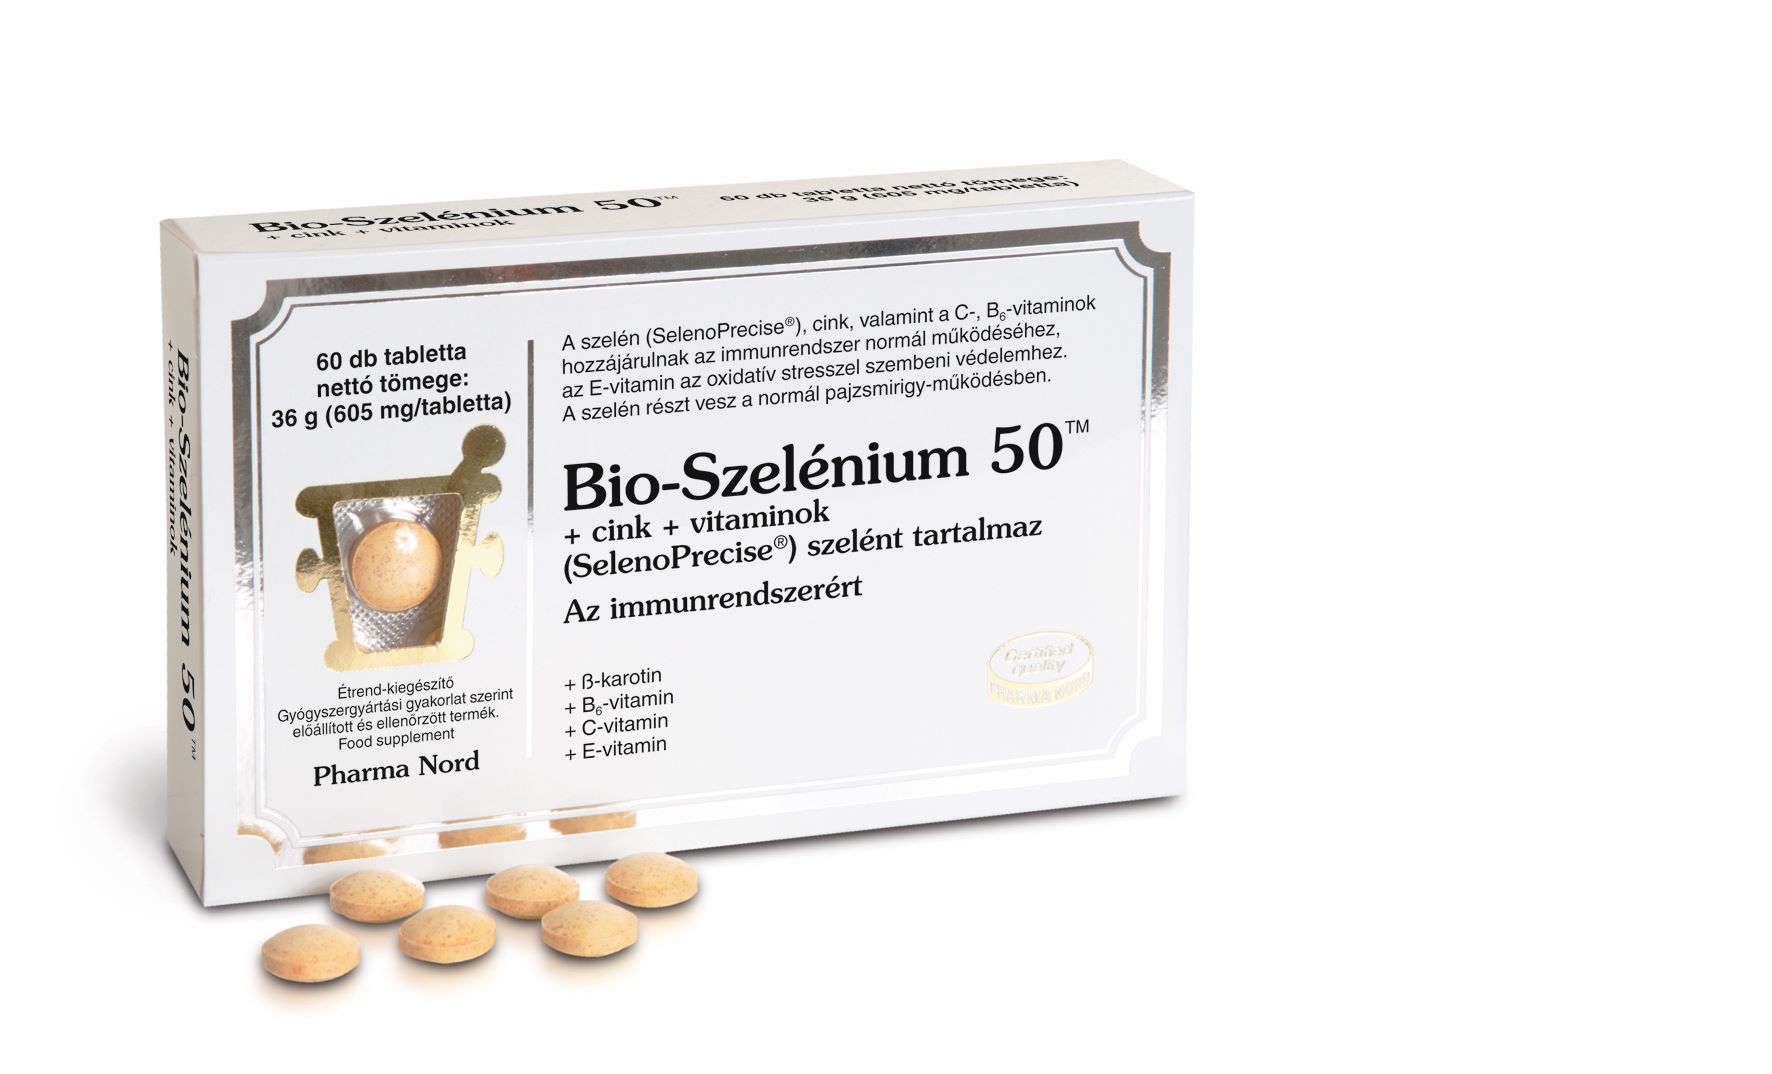 Bio - Szelénium 50 + Cink + vitaminok tabletta Pharma Nord